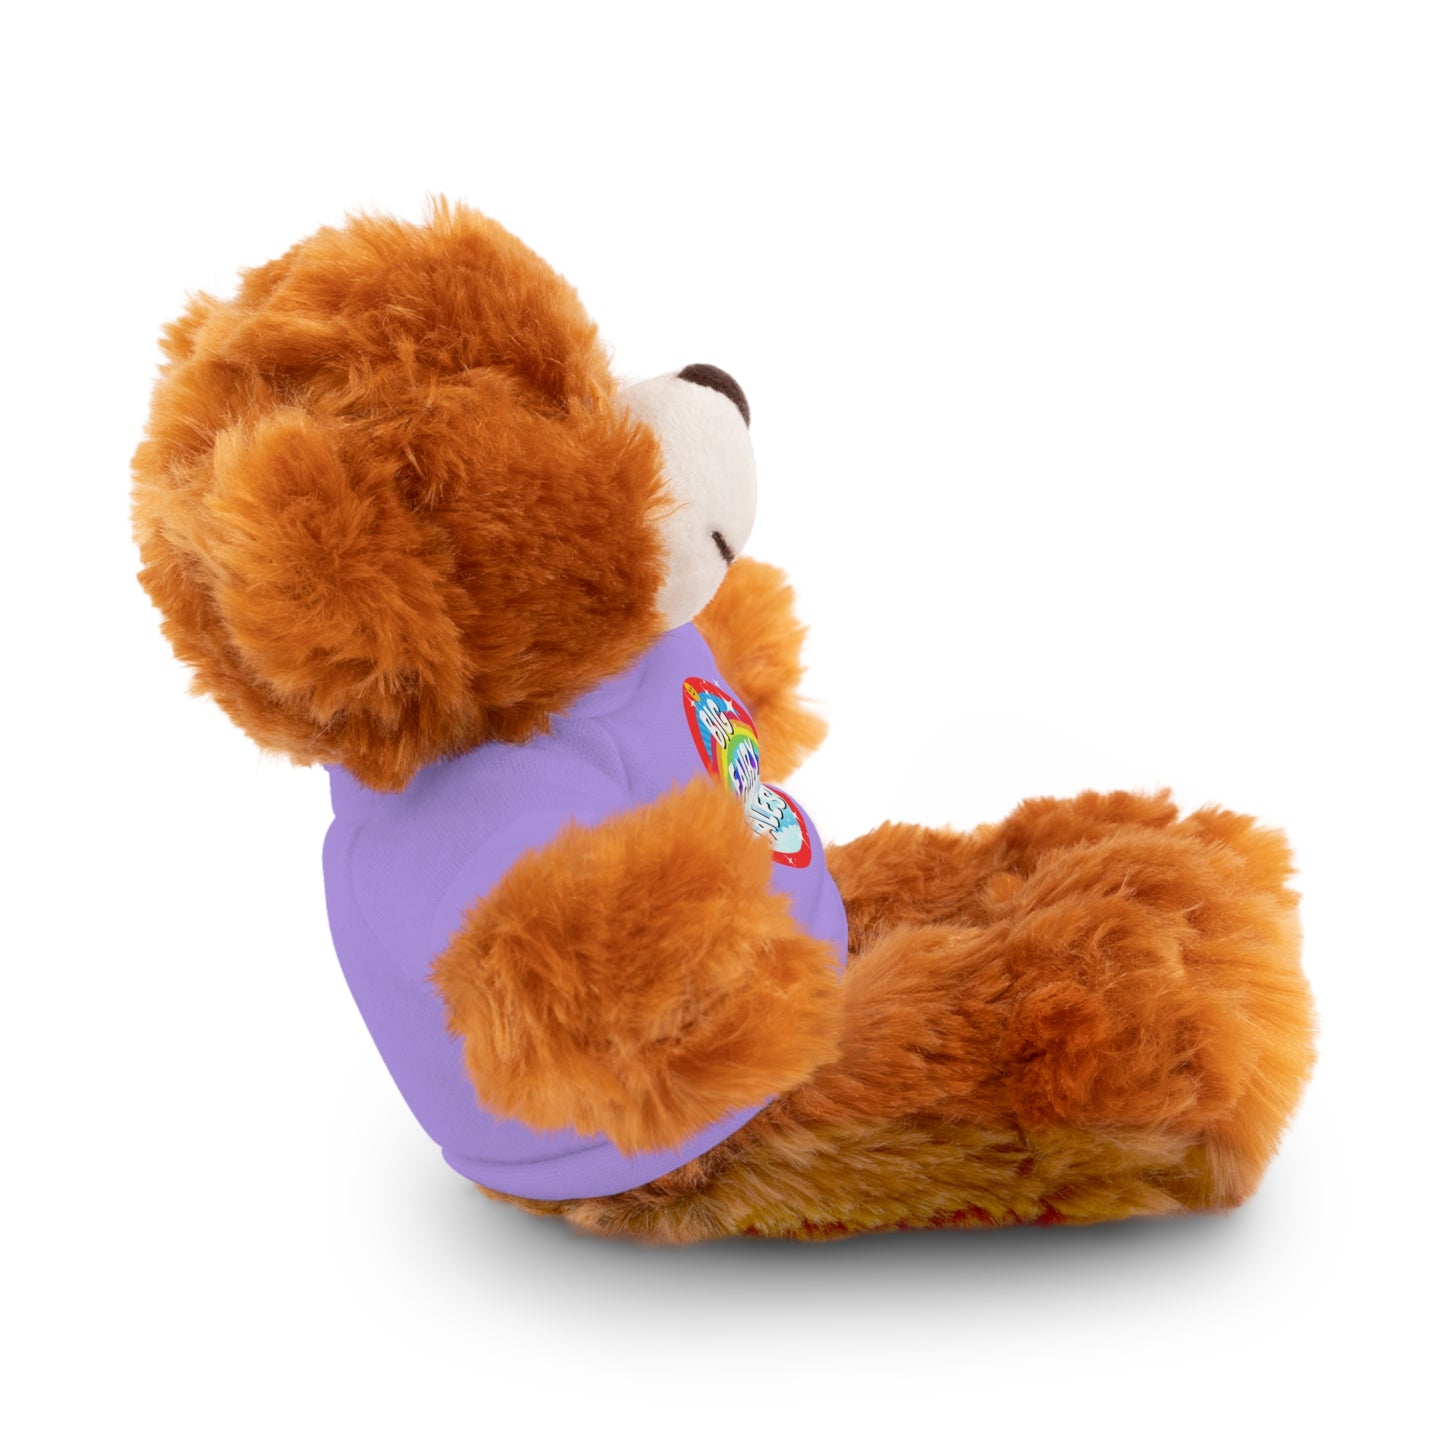 Big Fairy Tales By Schatar Adorable Stuffed Animal With Rainbow Tee